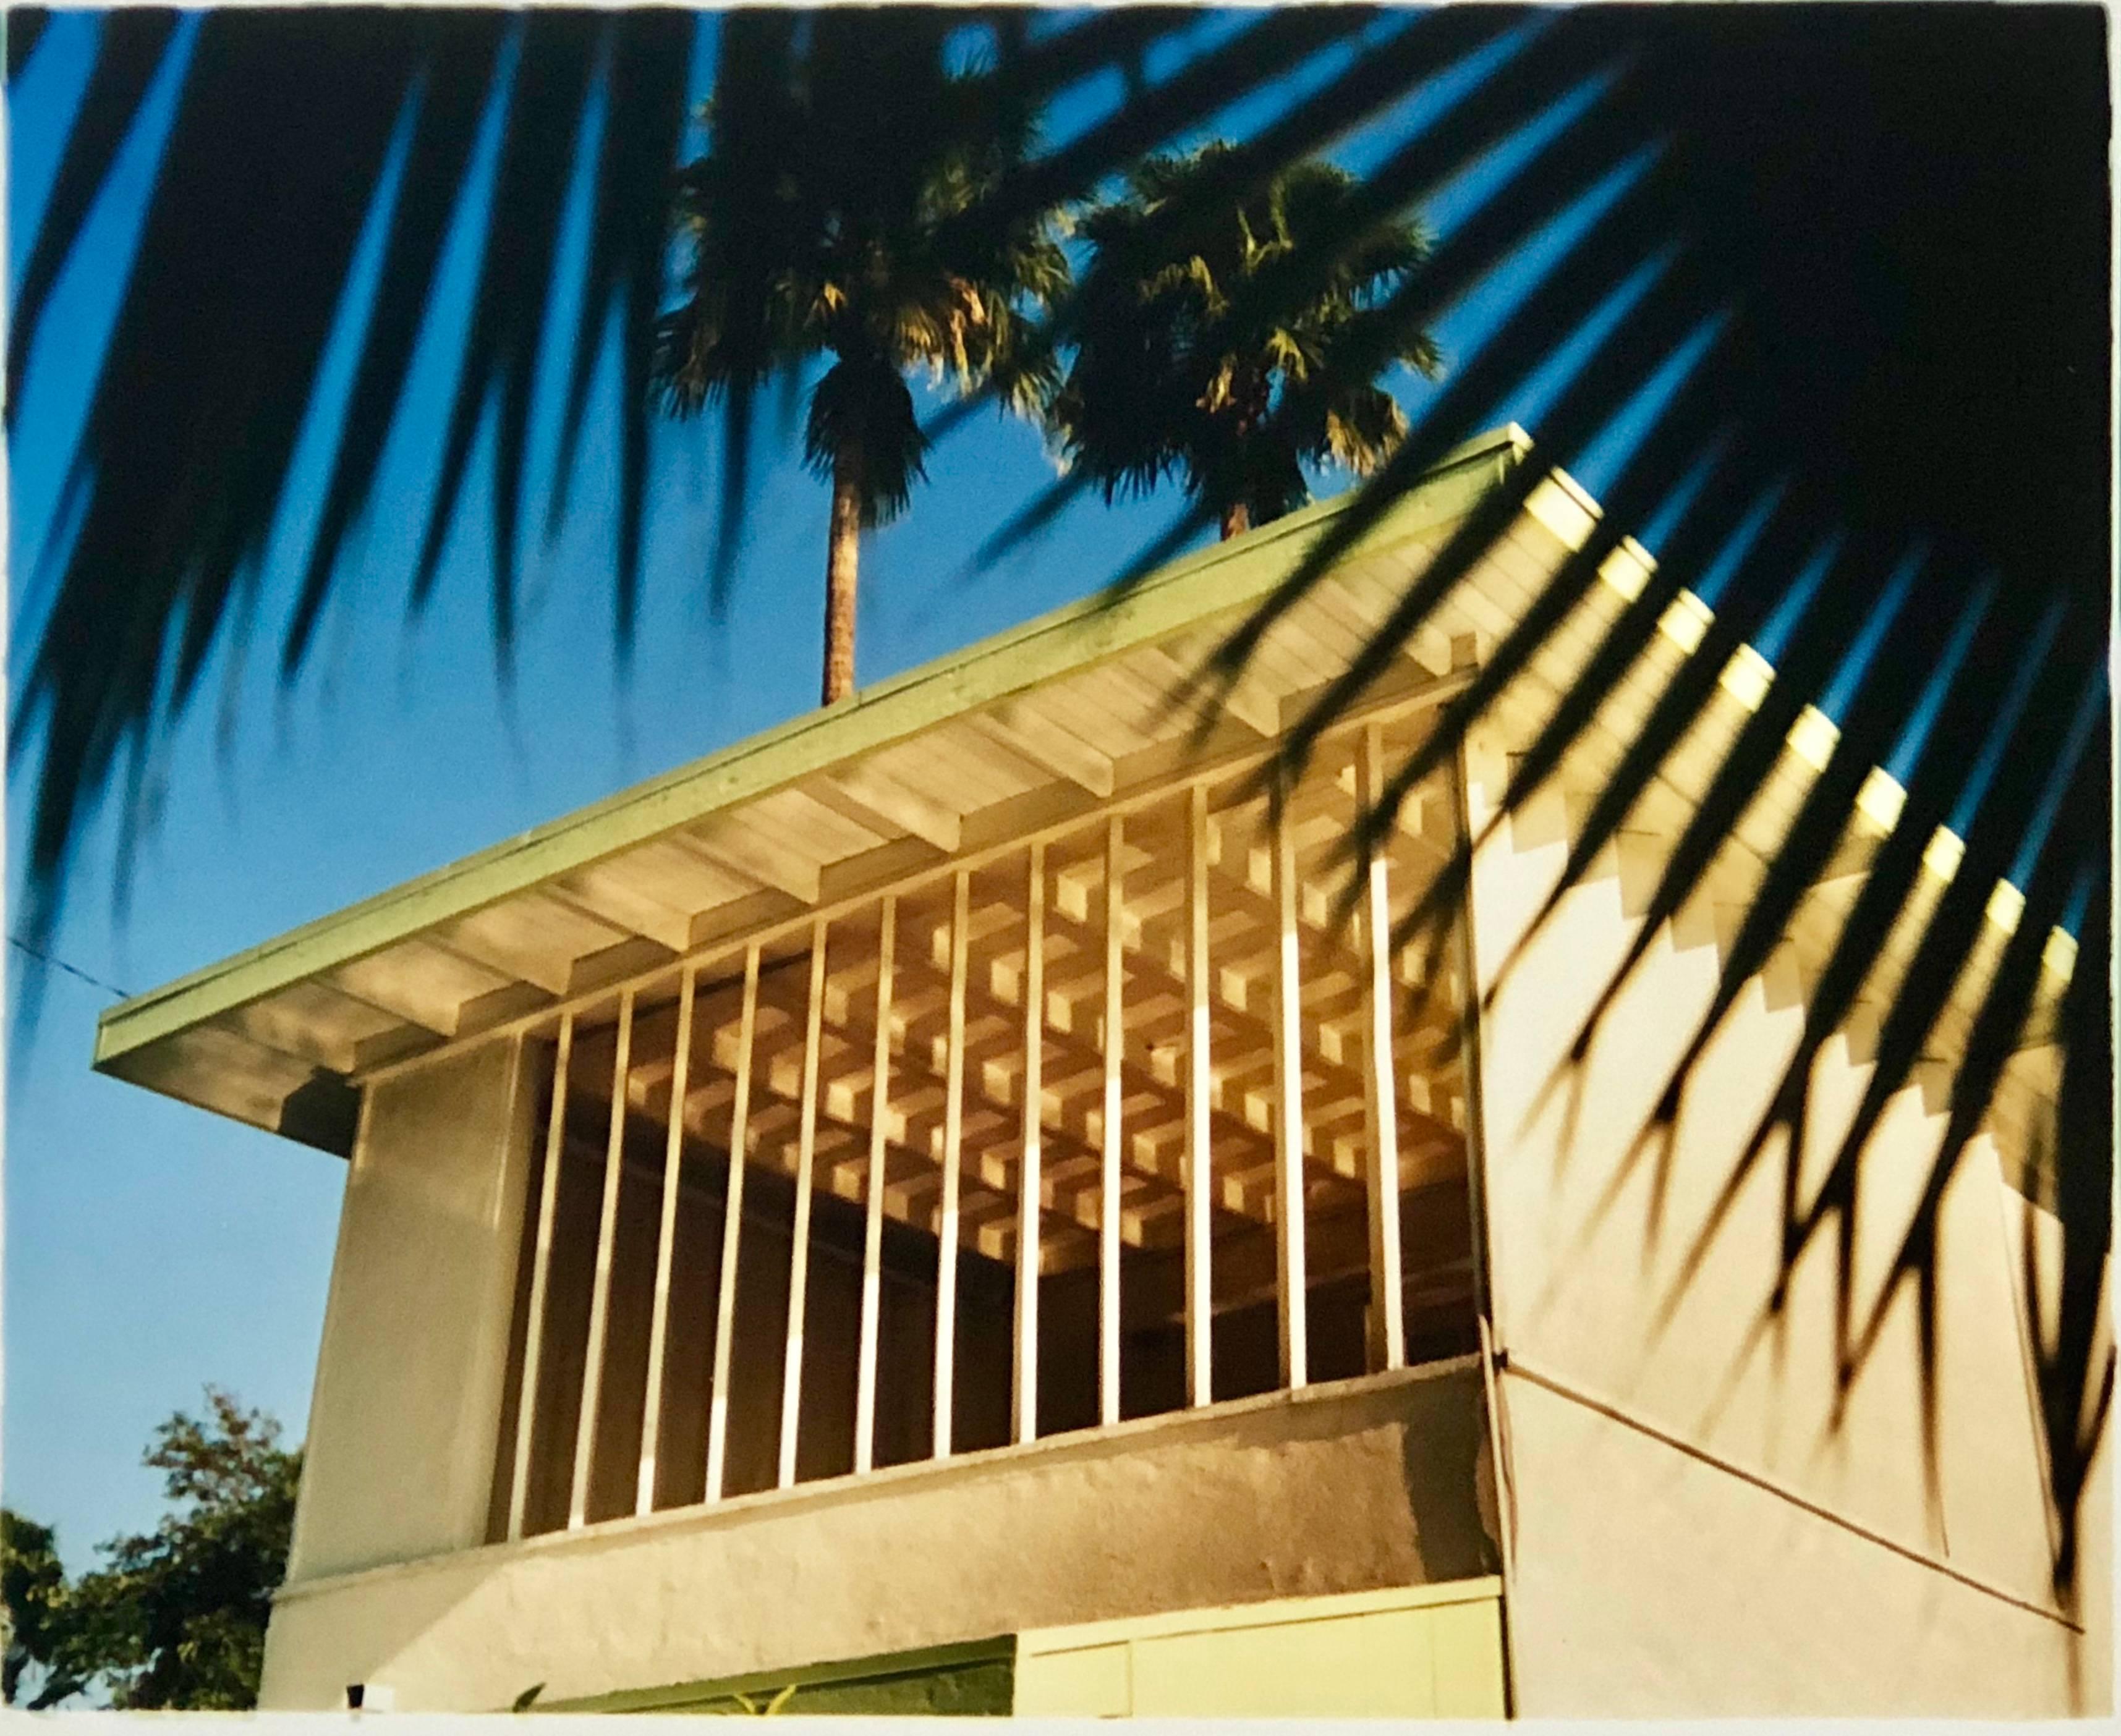 Richard Heeps Color Photograph - Ballantines Movie Colony II, Palm Springs, California - Mid-Century Architecture